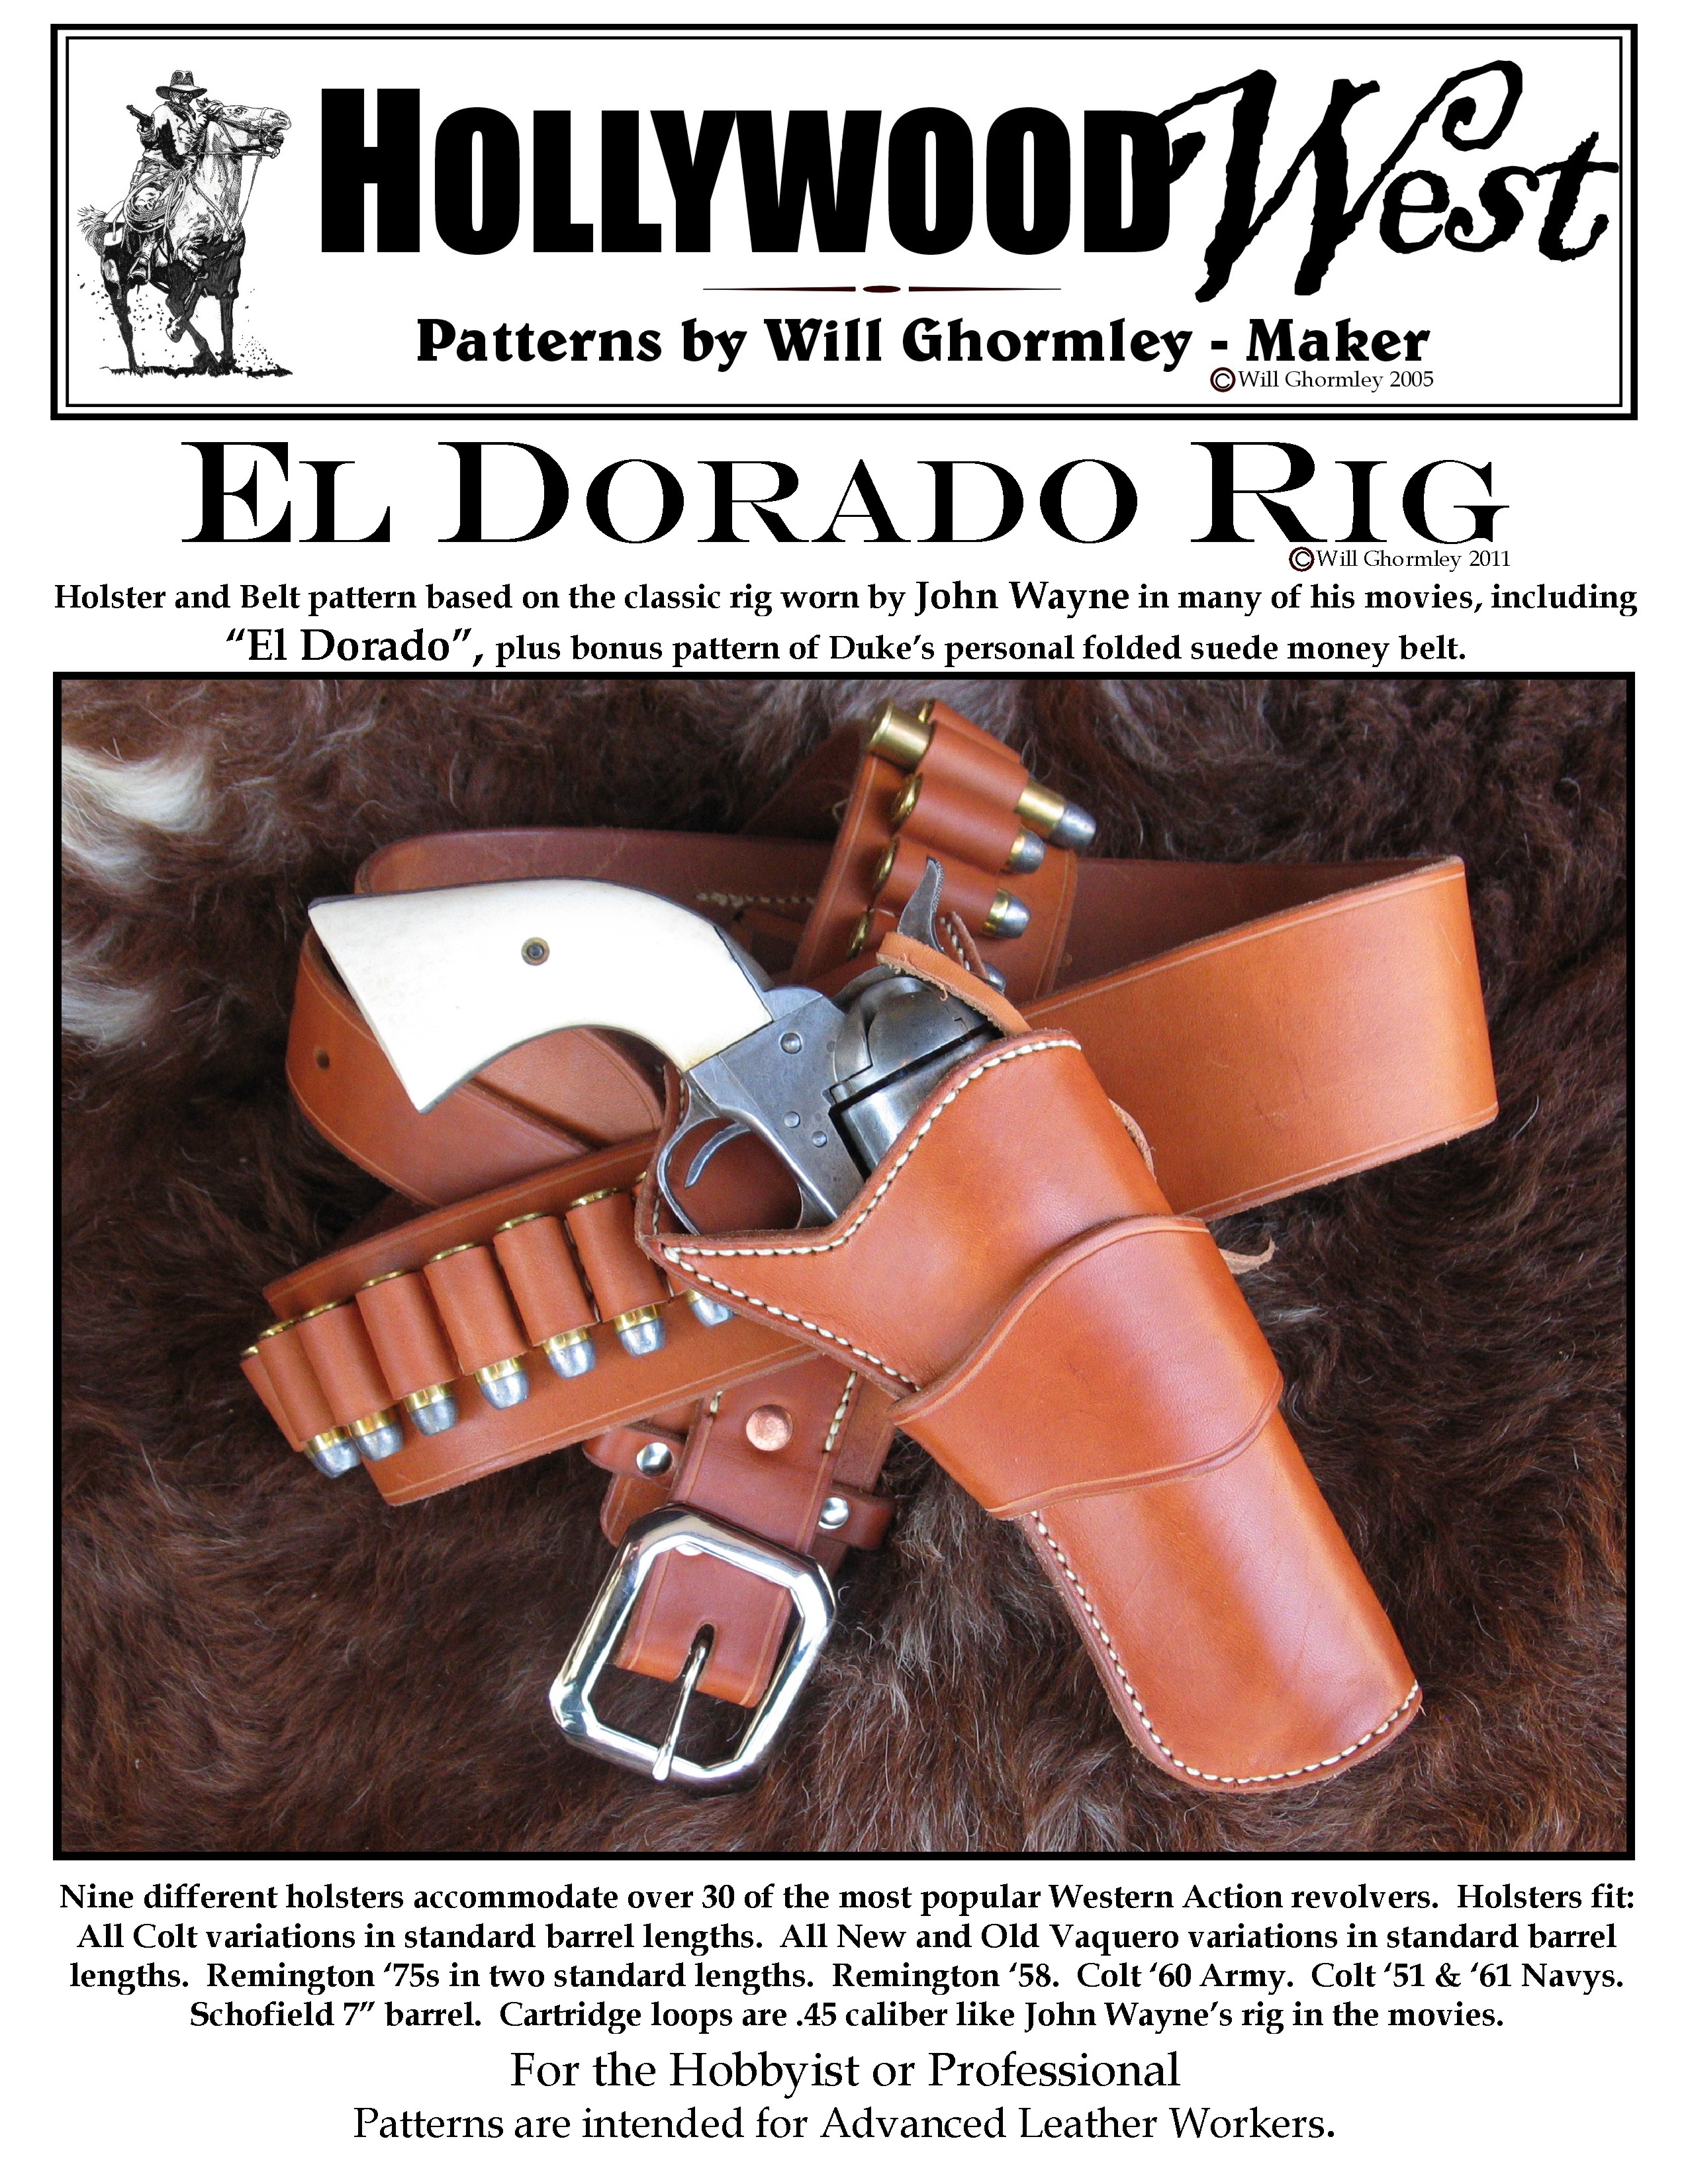 Reddog Leather Cowboy Western John Wayne Holster and Belt SASS the DUKE rig!!